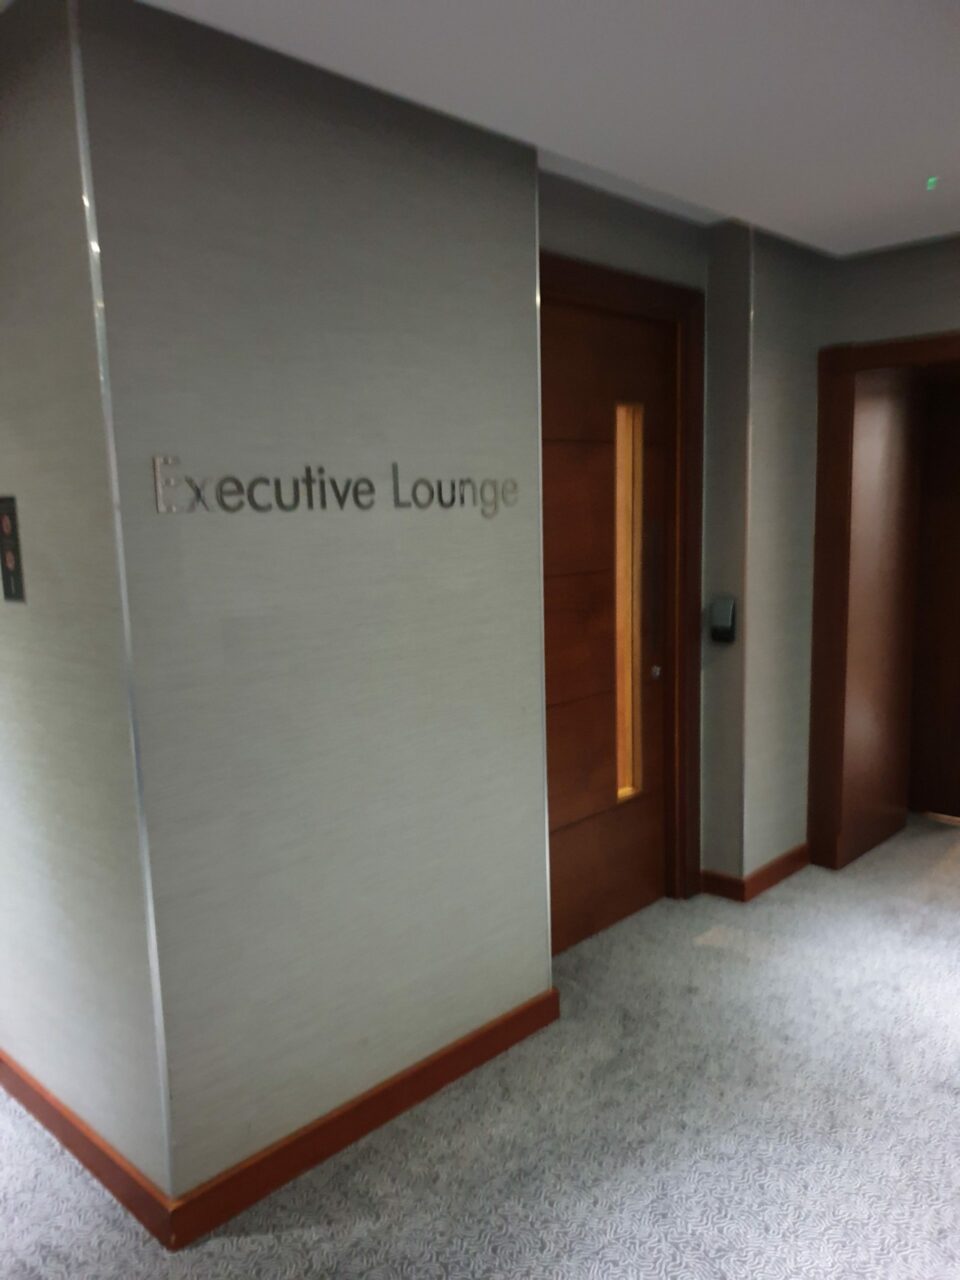 The Conrad St. James London Executive Lounge 